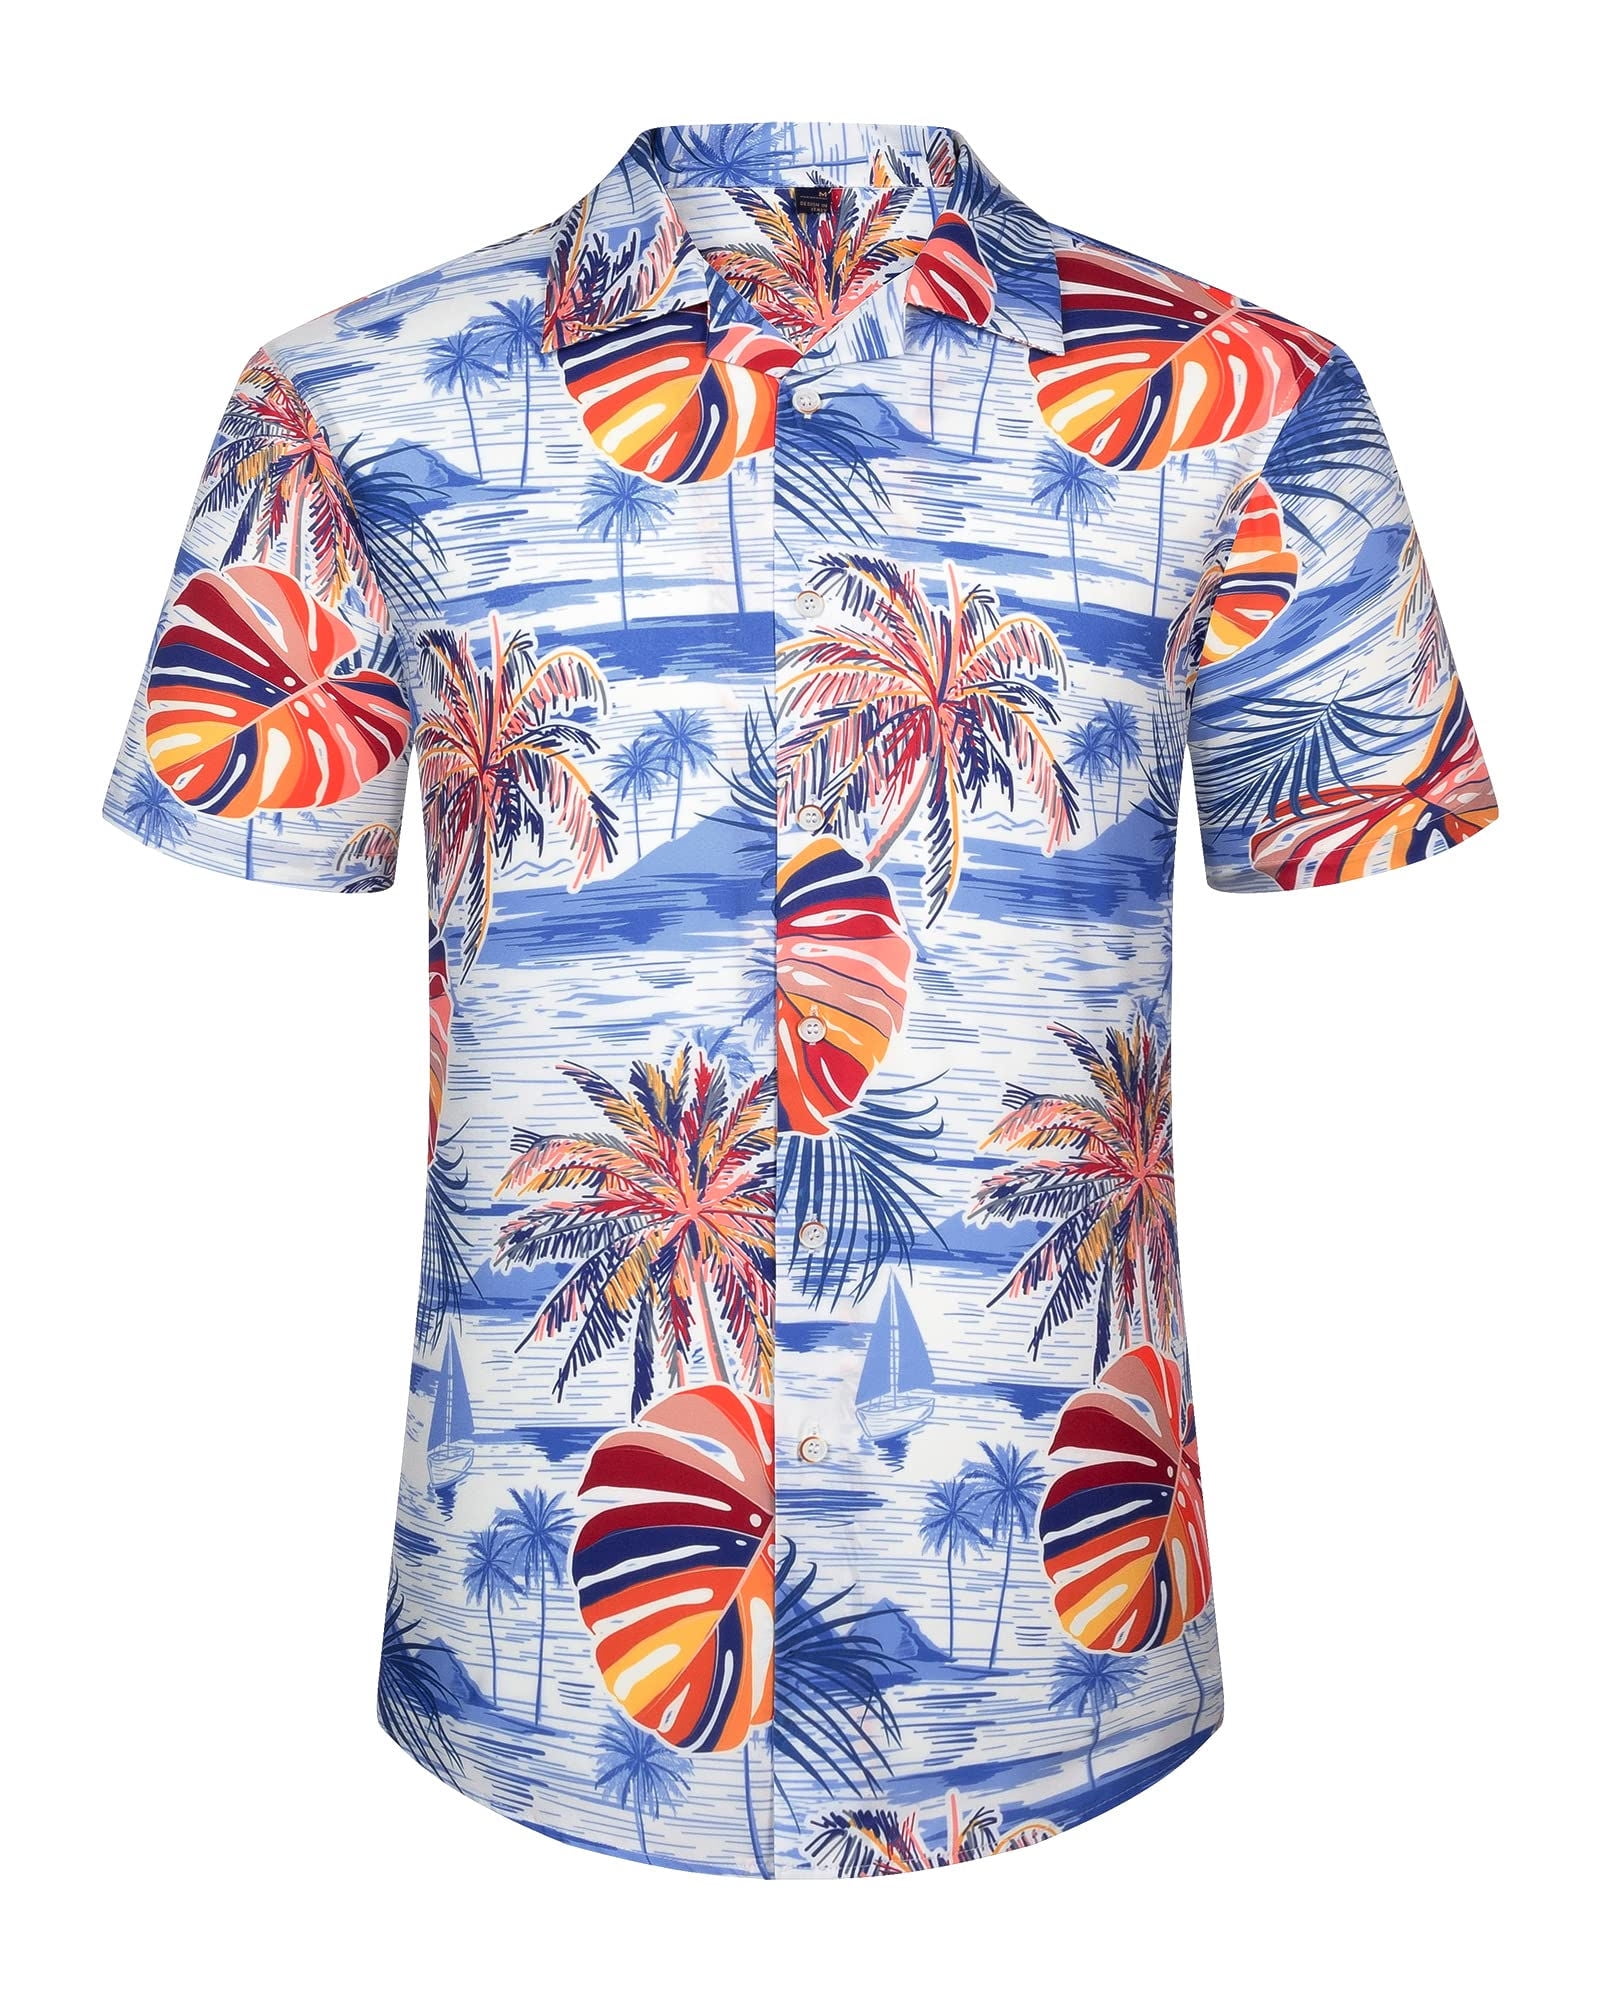 Siliteelon Short Sleeve Tropical Hawaiian Shirt for Men Summer Button ...